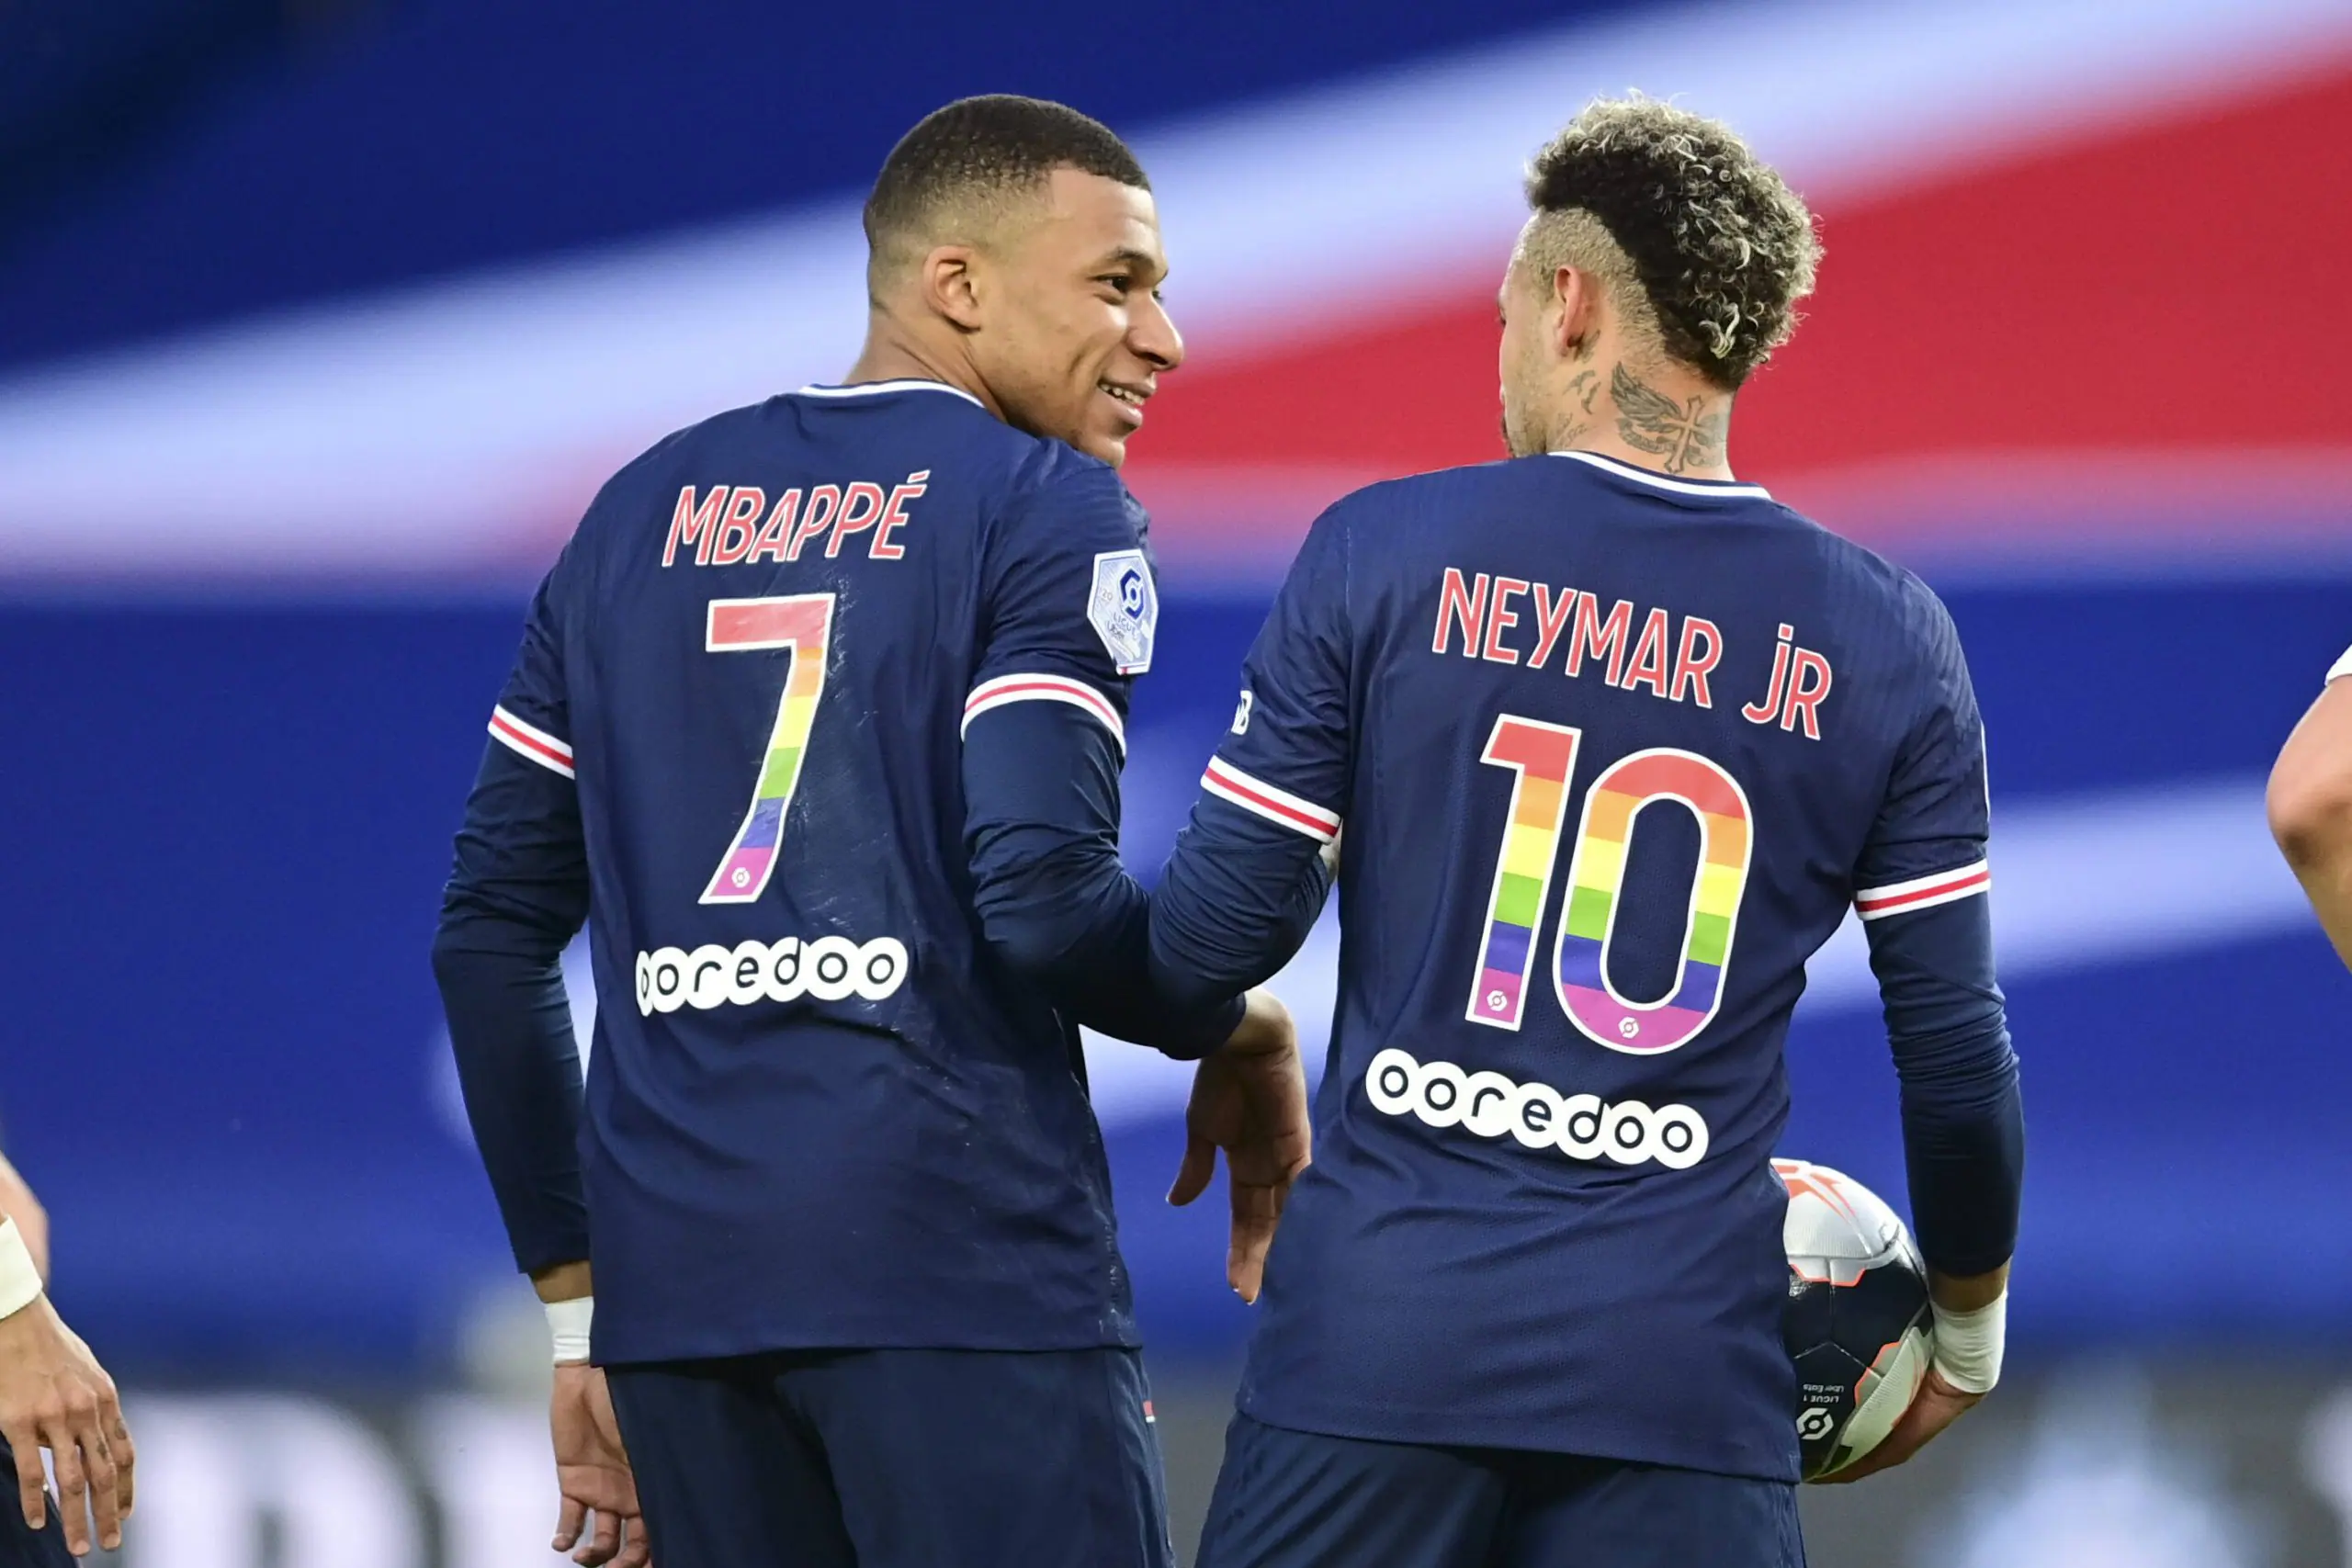 Paris Saint-Germain vs Montpellier Live Stream and Preview